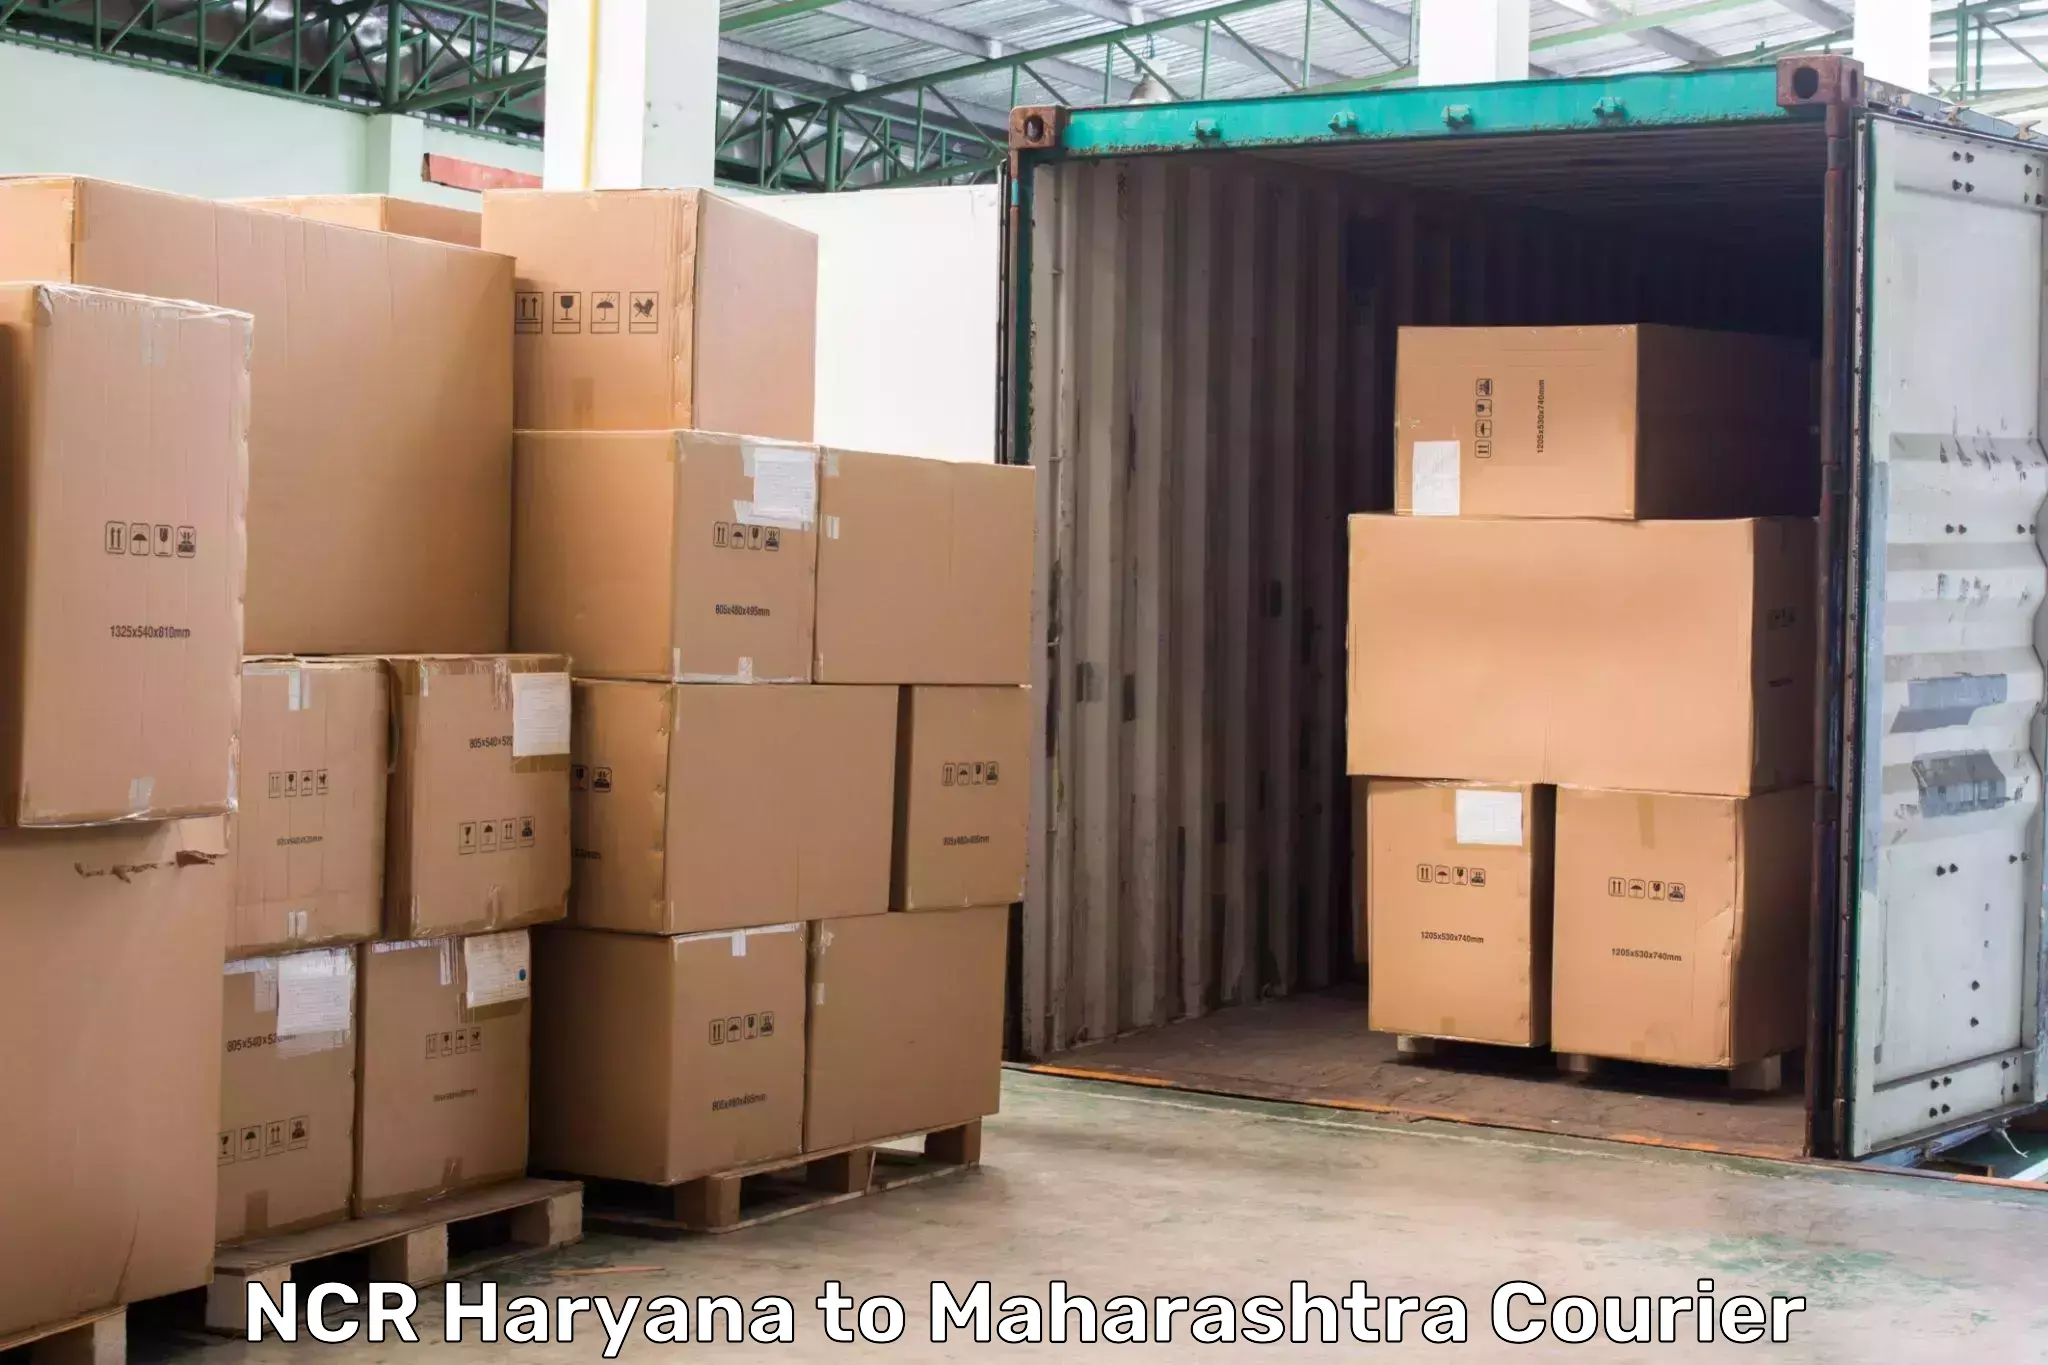 Cash on delivery service NCR Haryana to Maharashtra